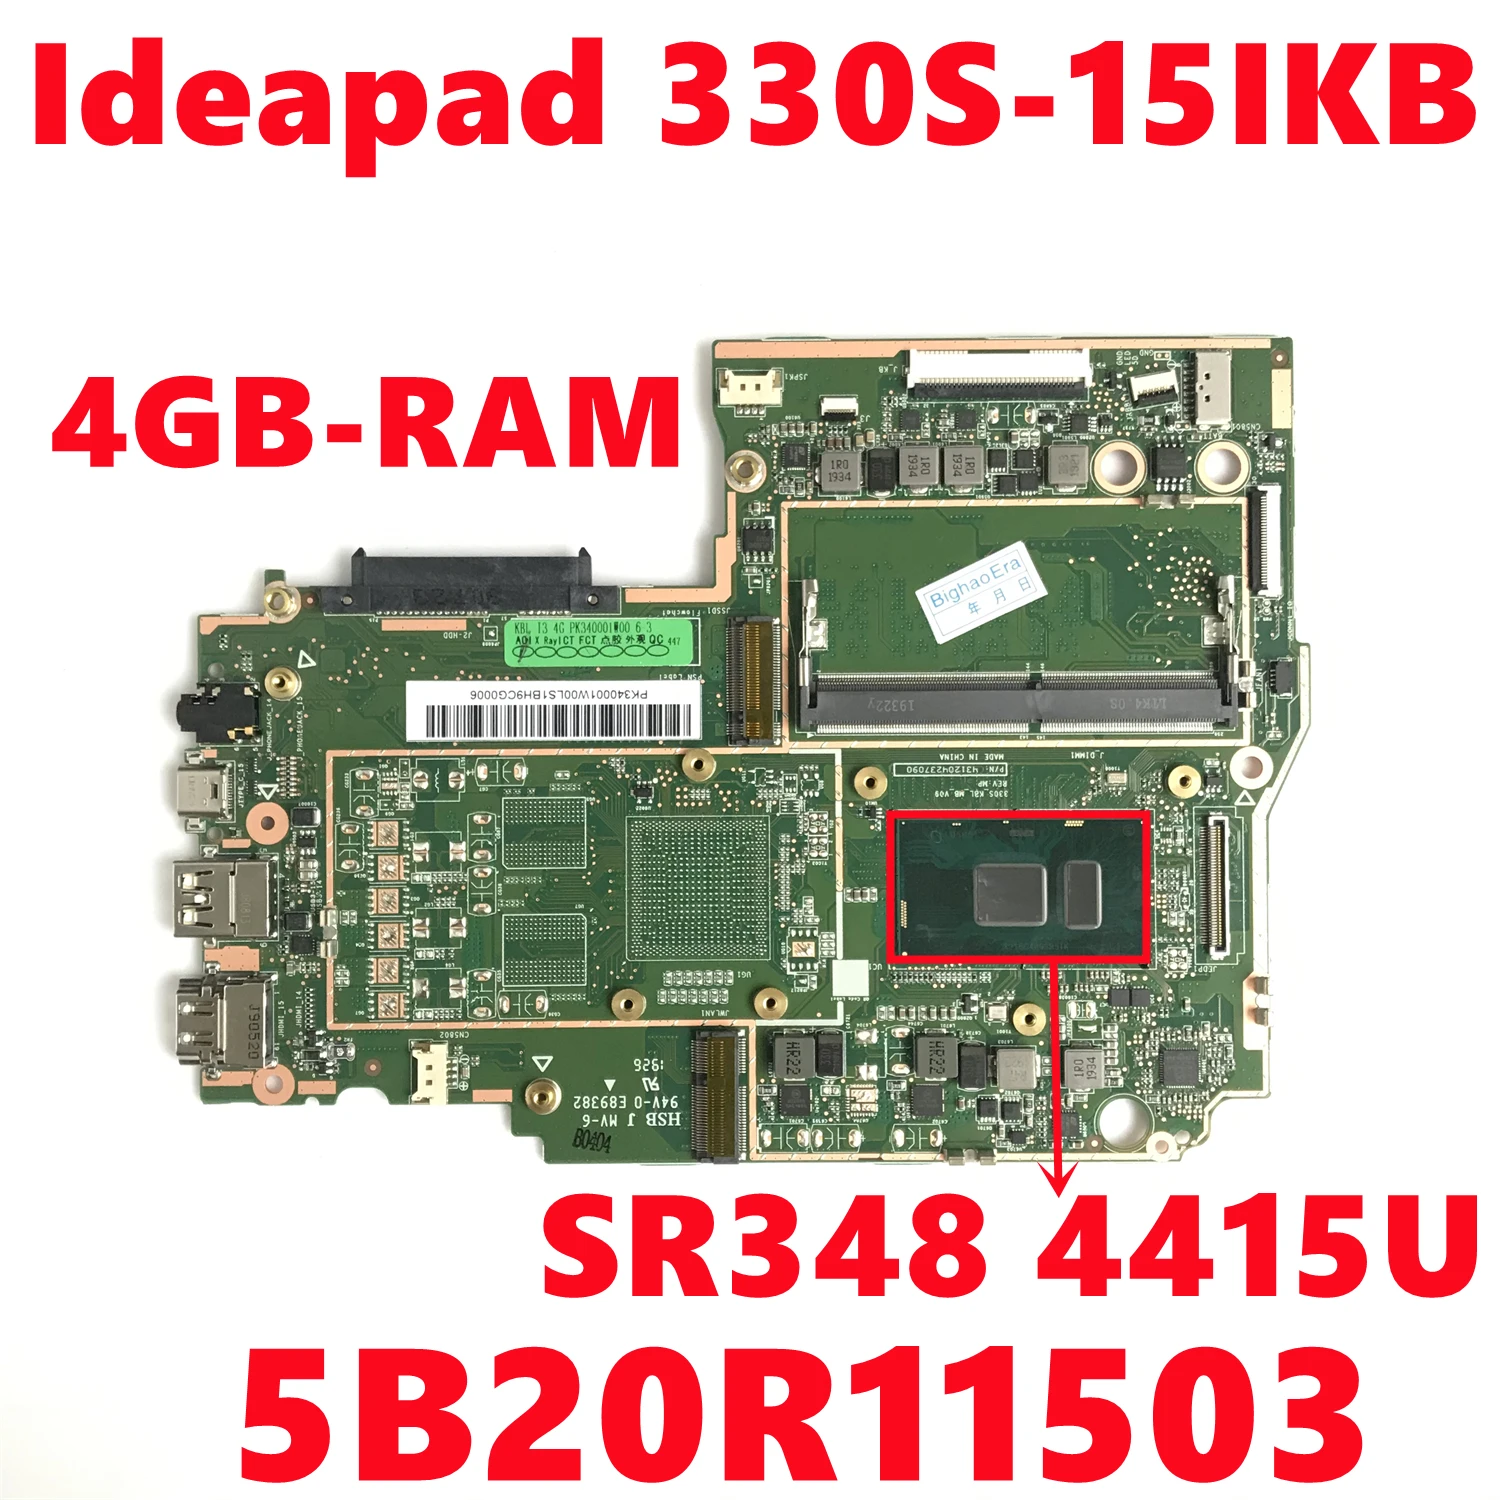 

FRU 5B20R11503 Mainboard For Lenovo Ideapad 330S-15IKB Laptop Motherboard With SR348 4415U CPU 4GB-RAM DDR4 100% Tested Working